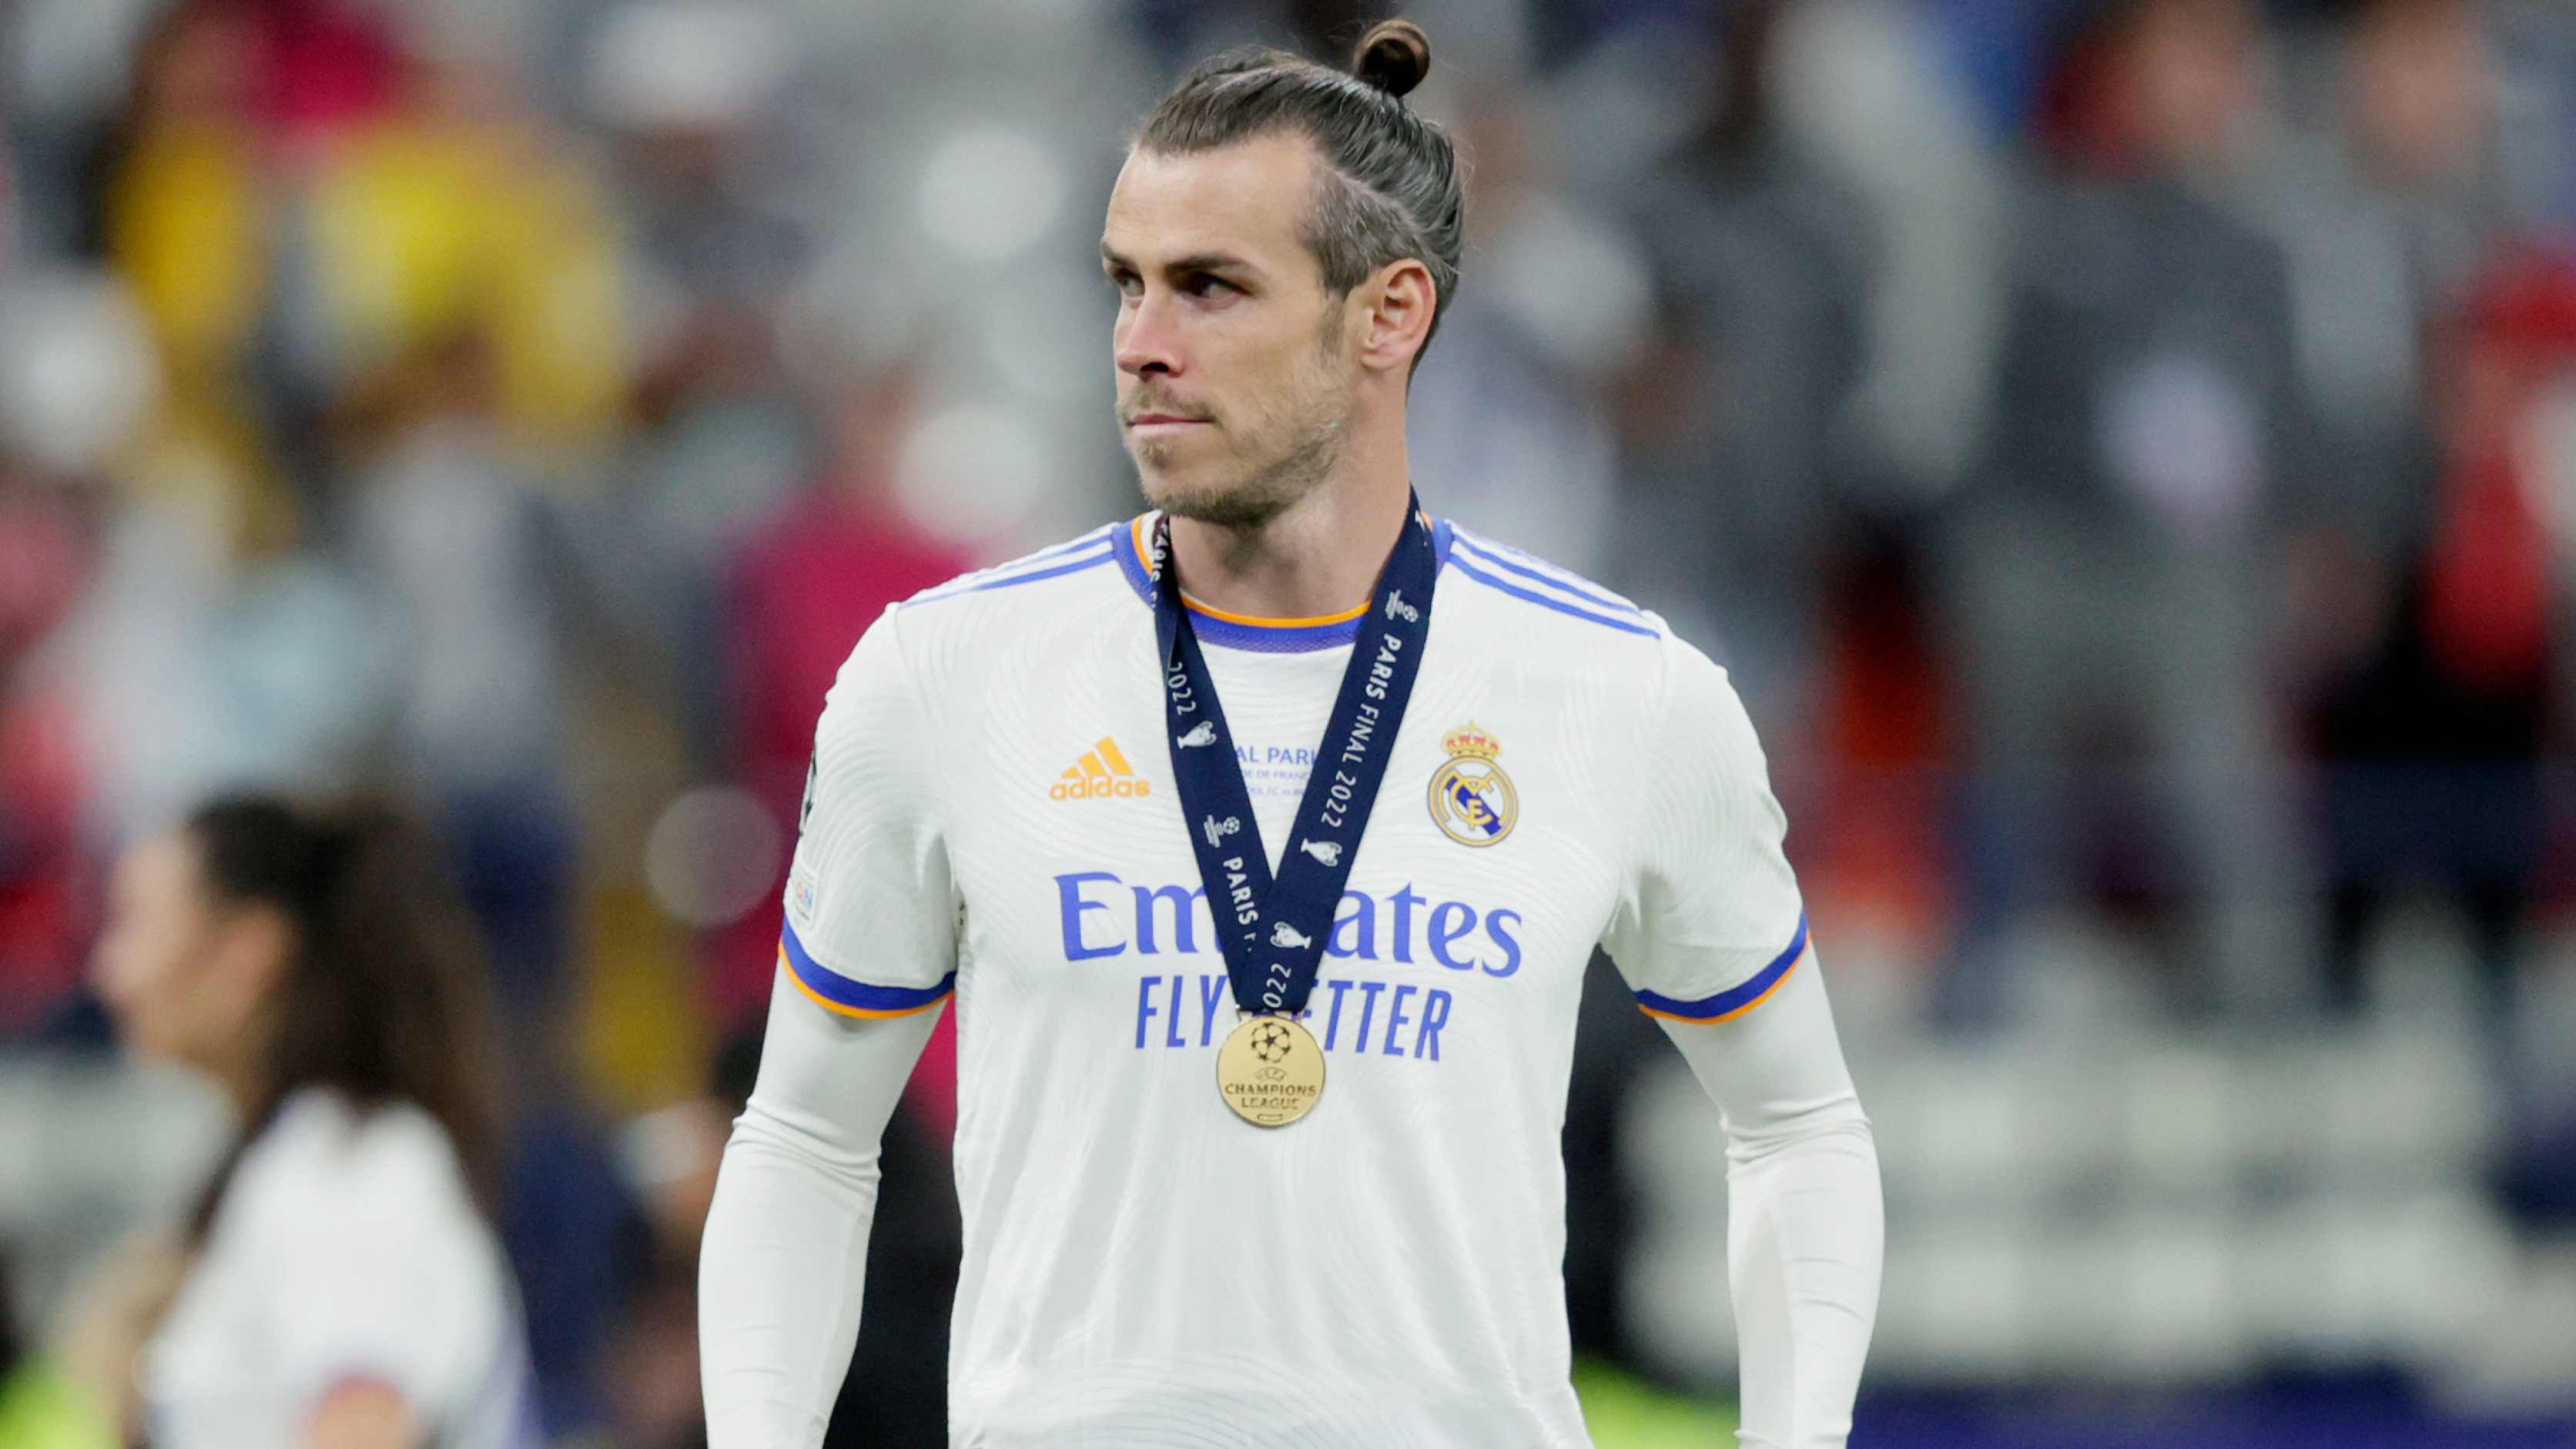 What would Gareth Bale's career look like if he and Modric had